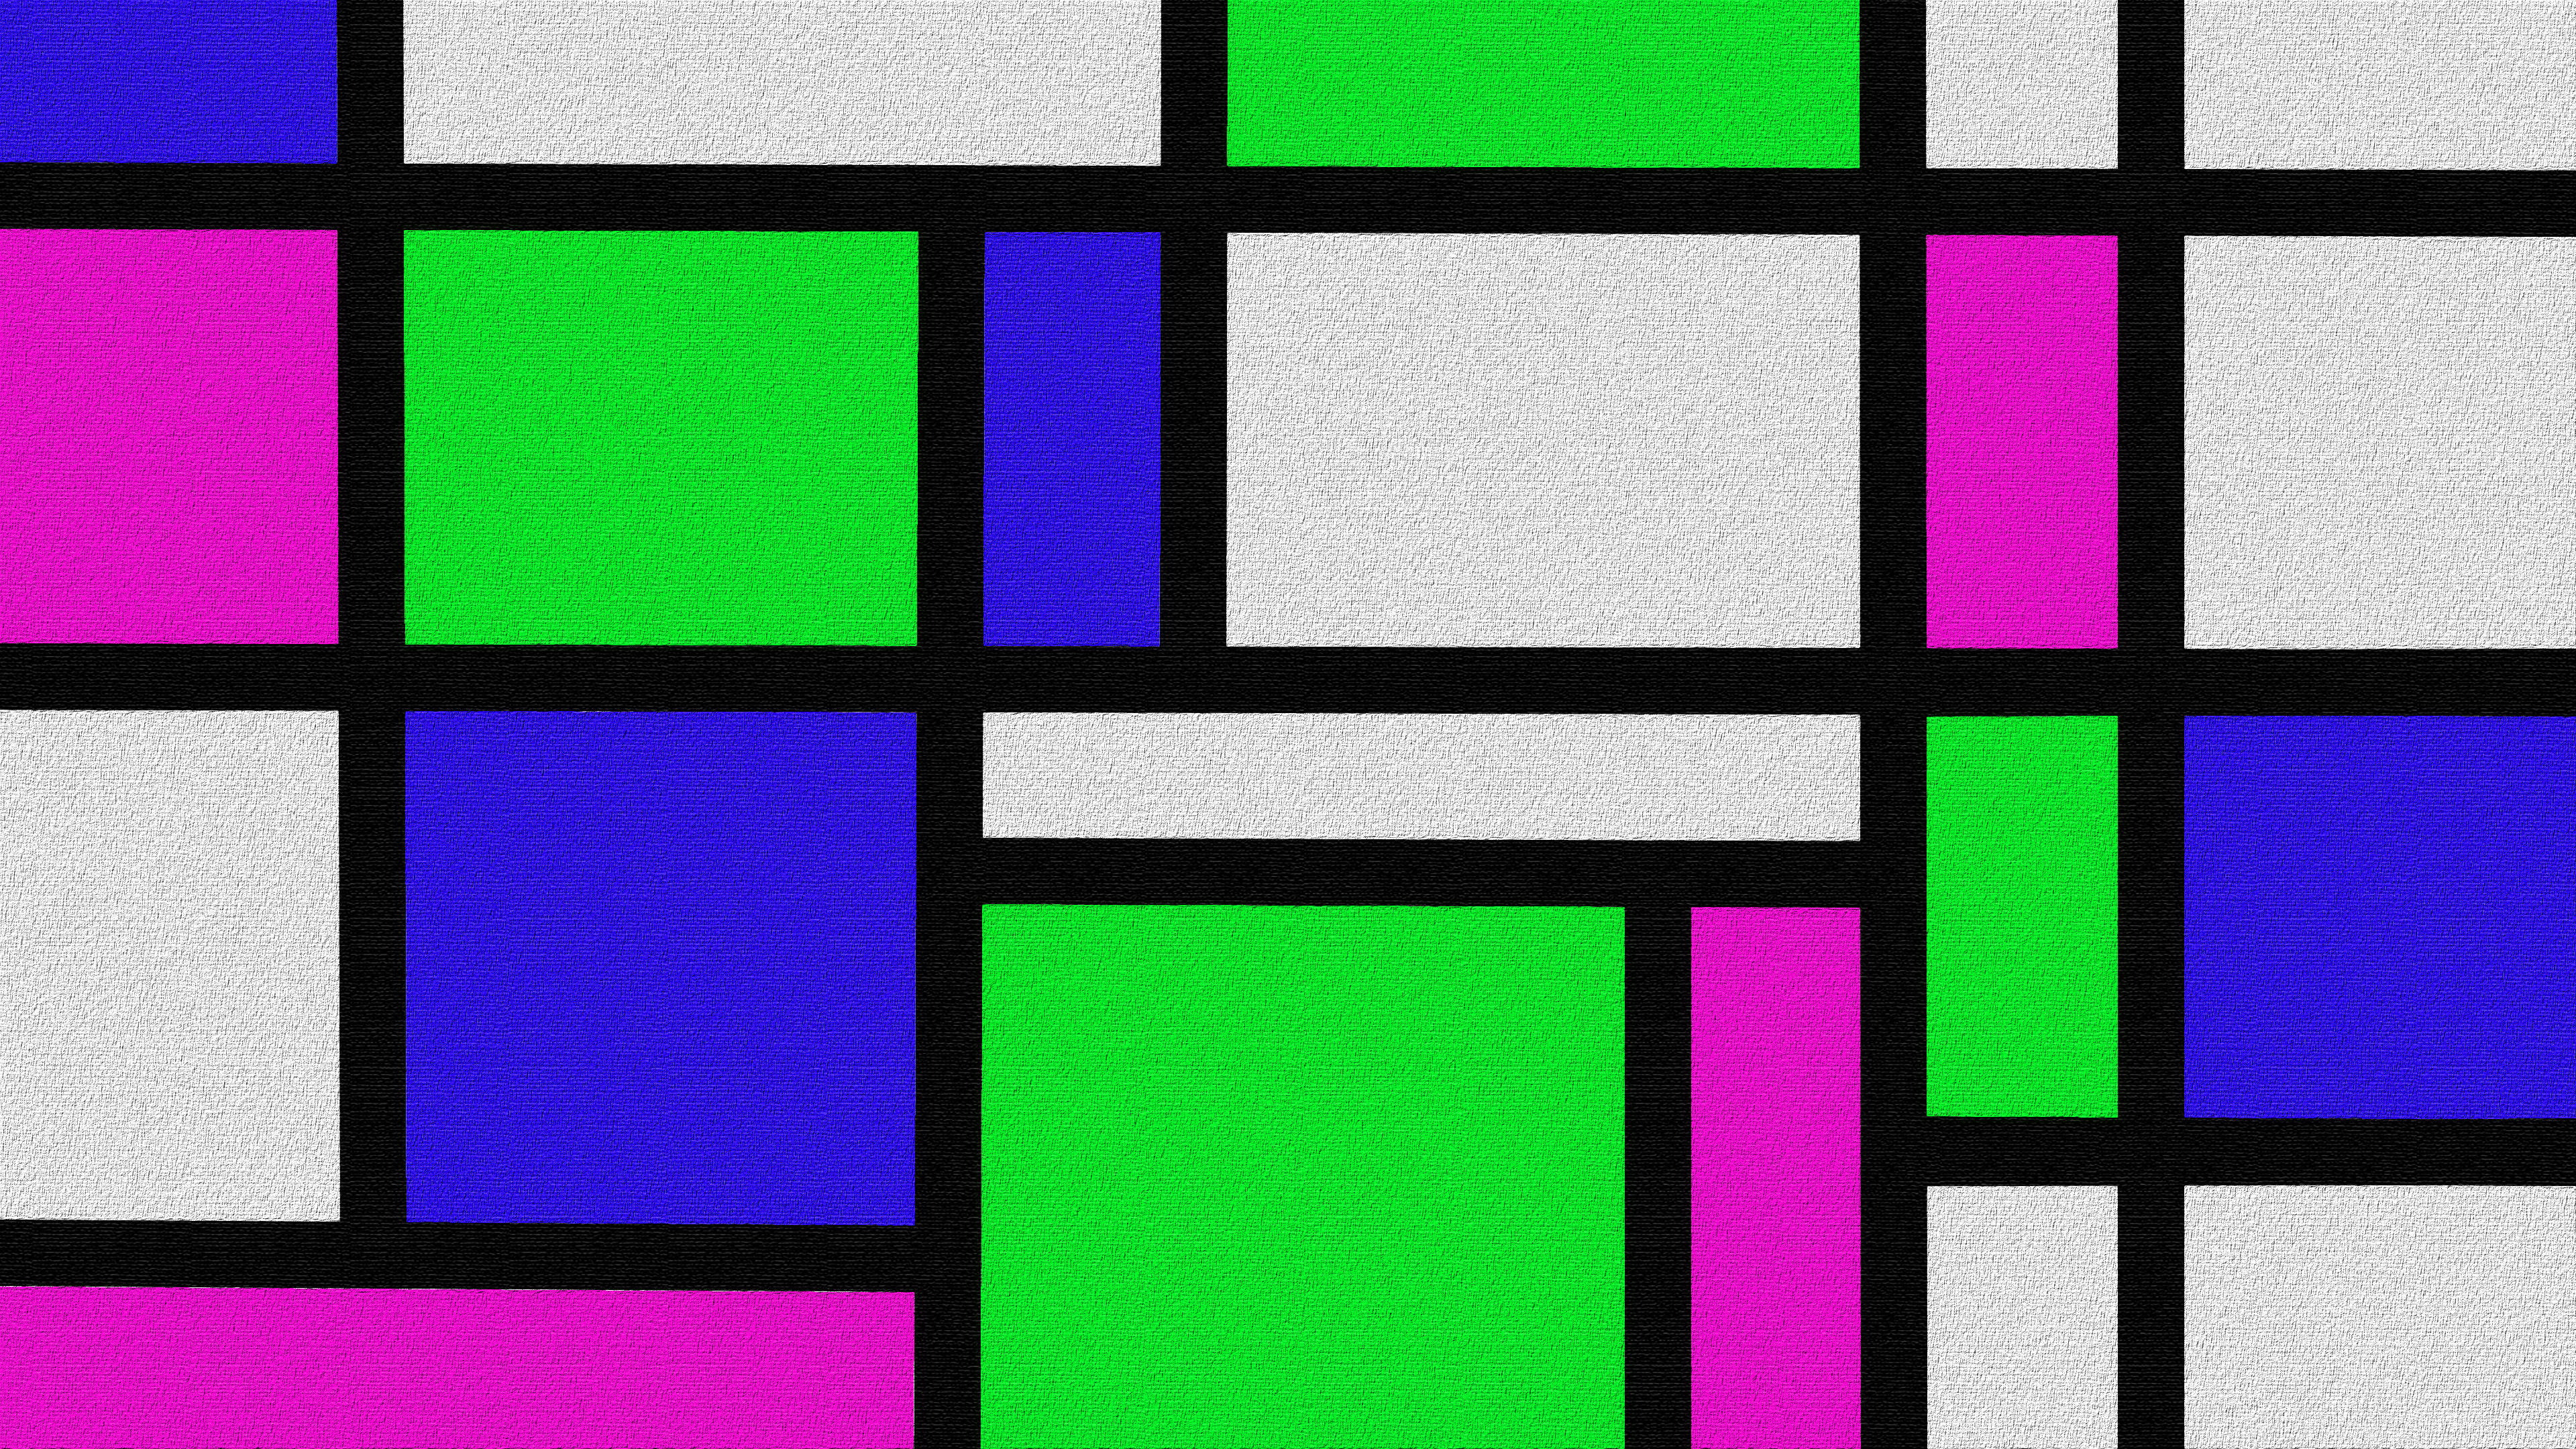 Alternative Mondrian By Manufan63 4k Ultra Hd Wallpaper Background Image 3840x2160